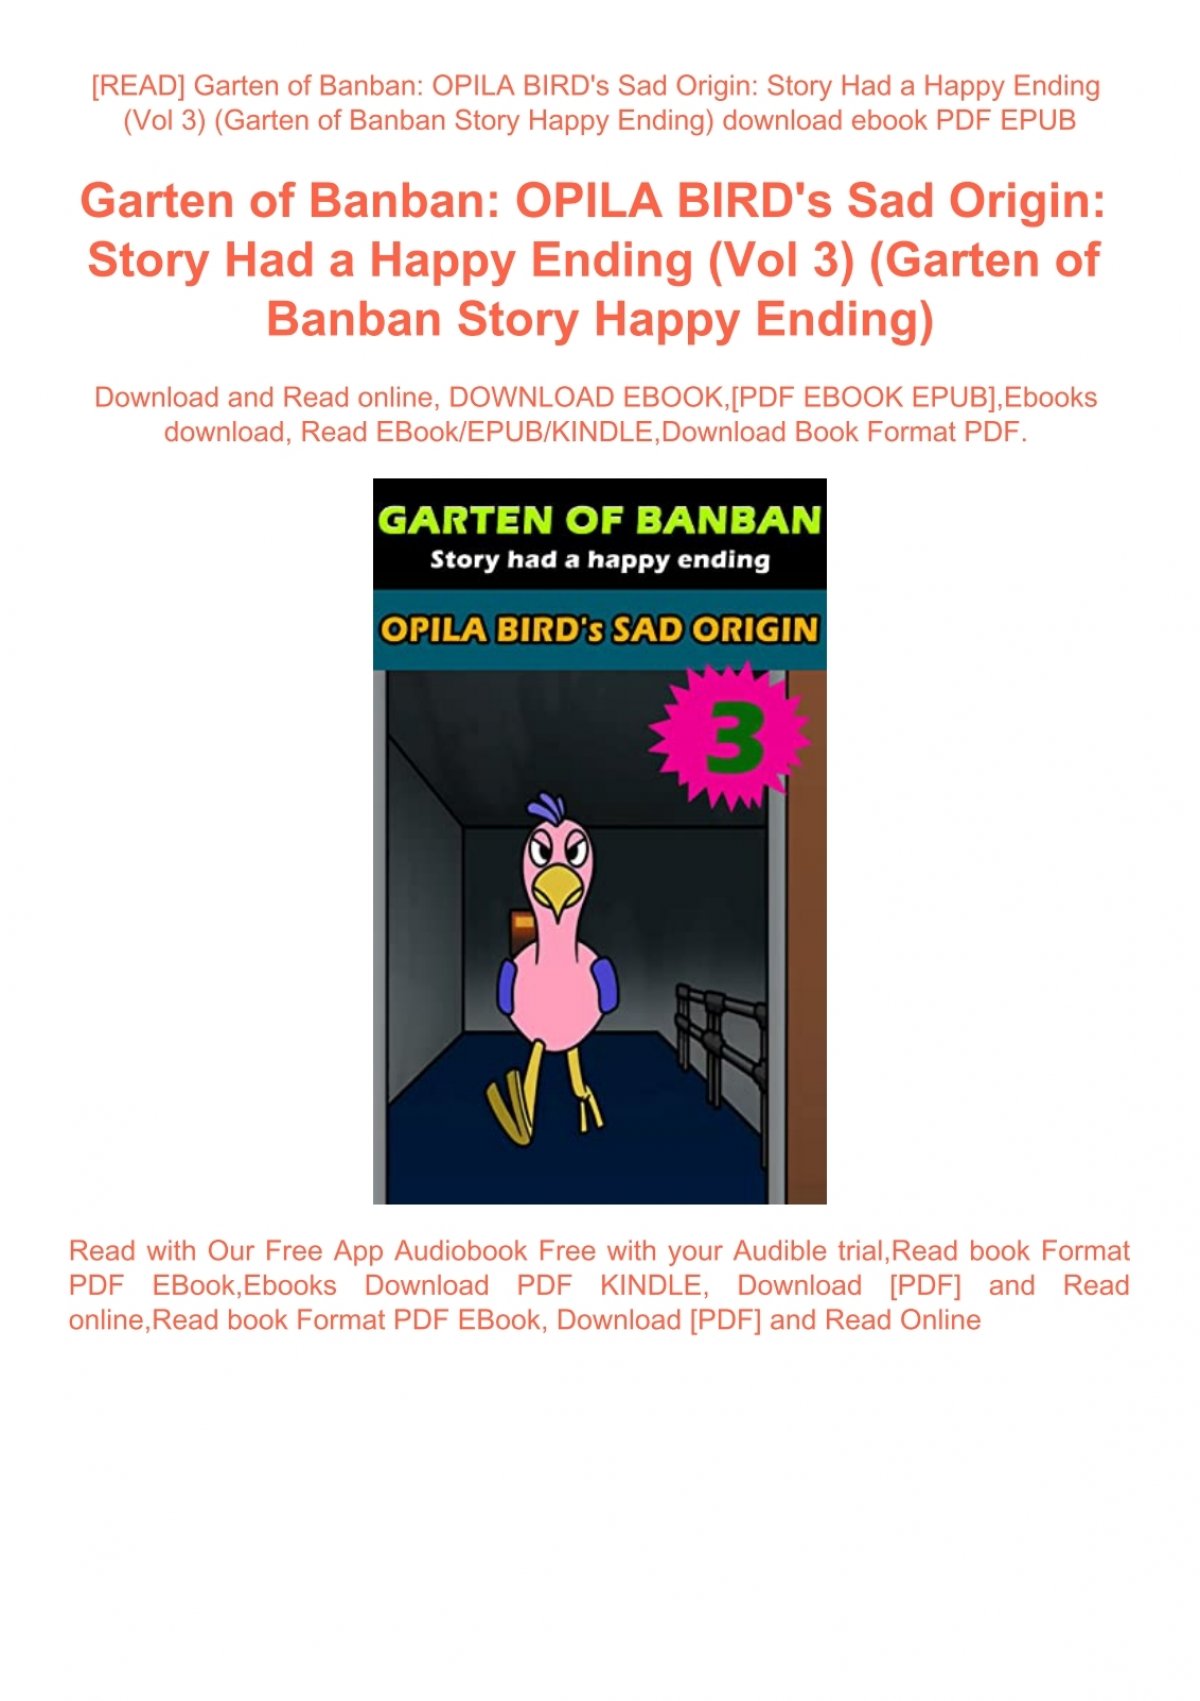 Garten of Banban: OPILA BIRD's Sad Origin: Story Had a Happy Ending (Vol 3)  (Garten of Banban Story Happy Ending) See more